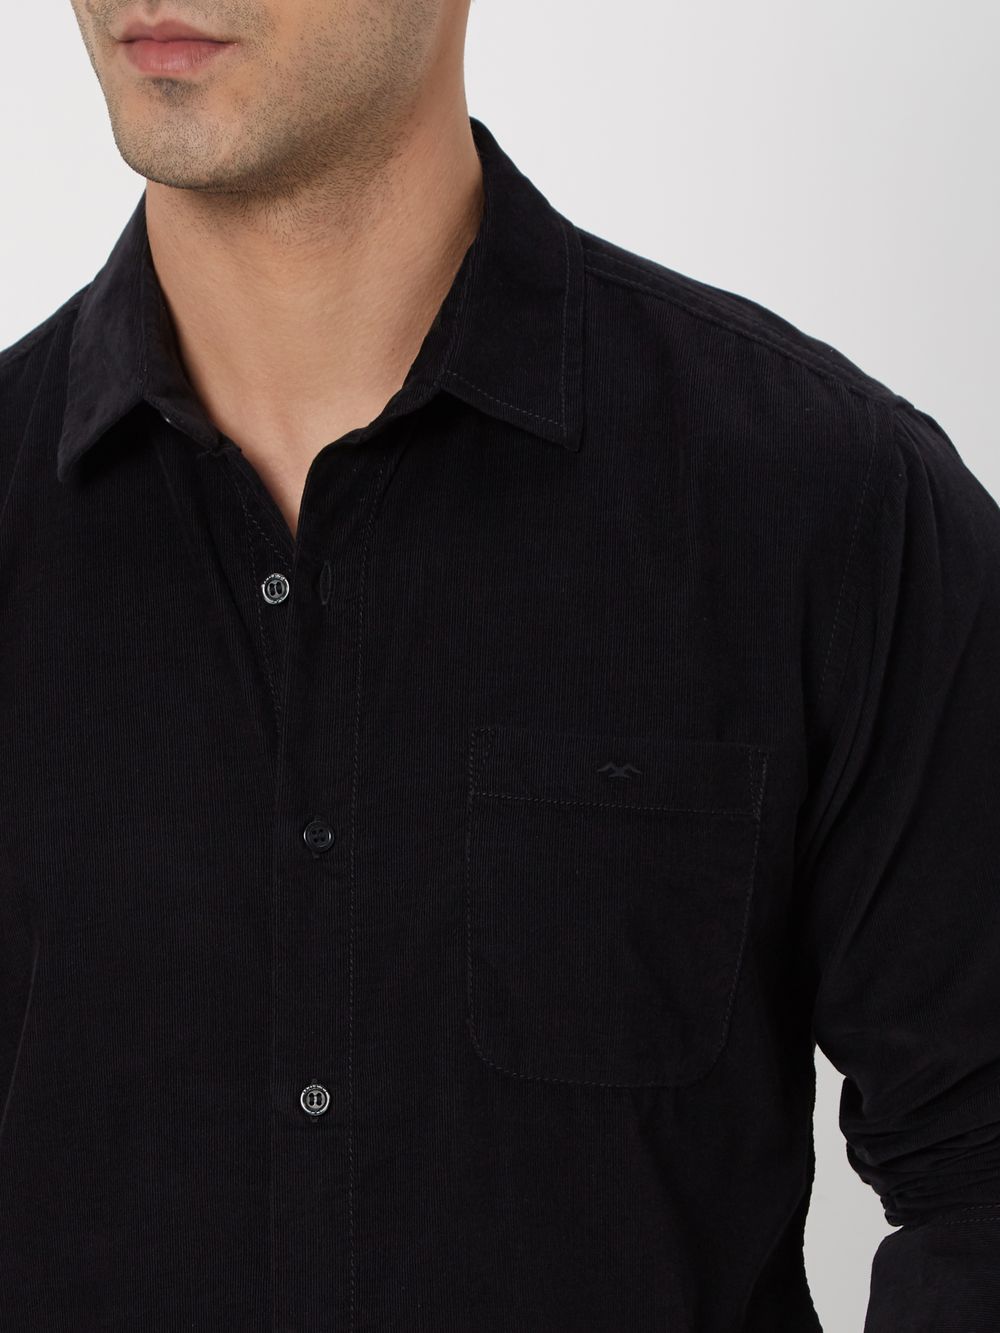 Black Corduroy Plain Shirt